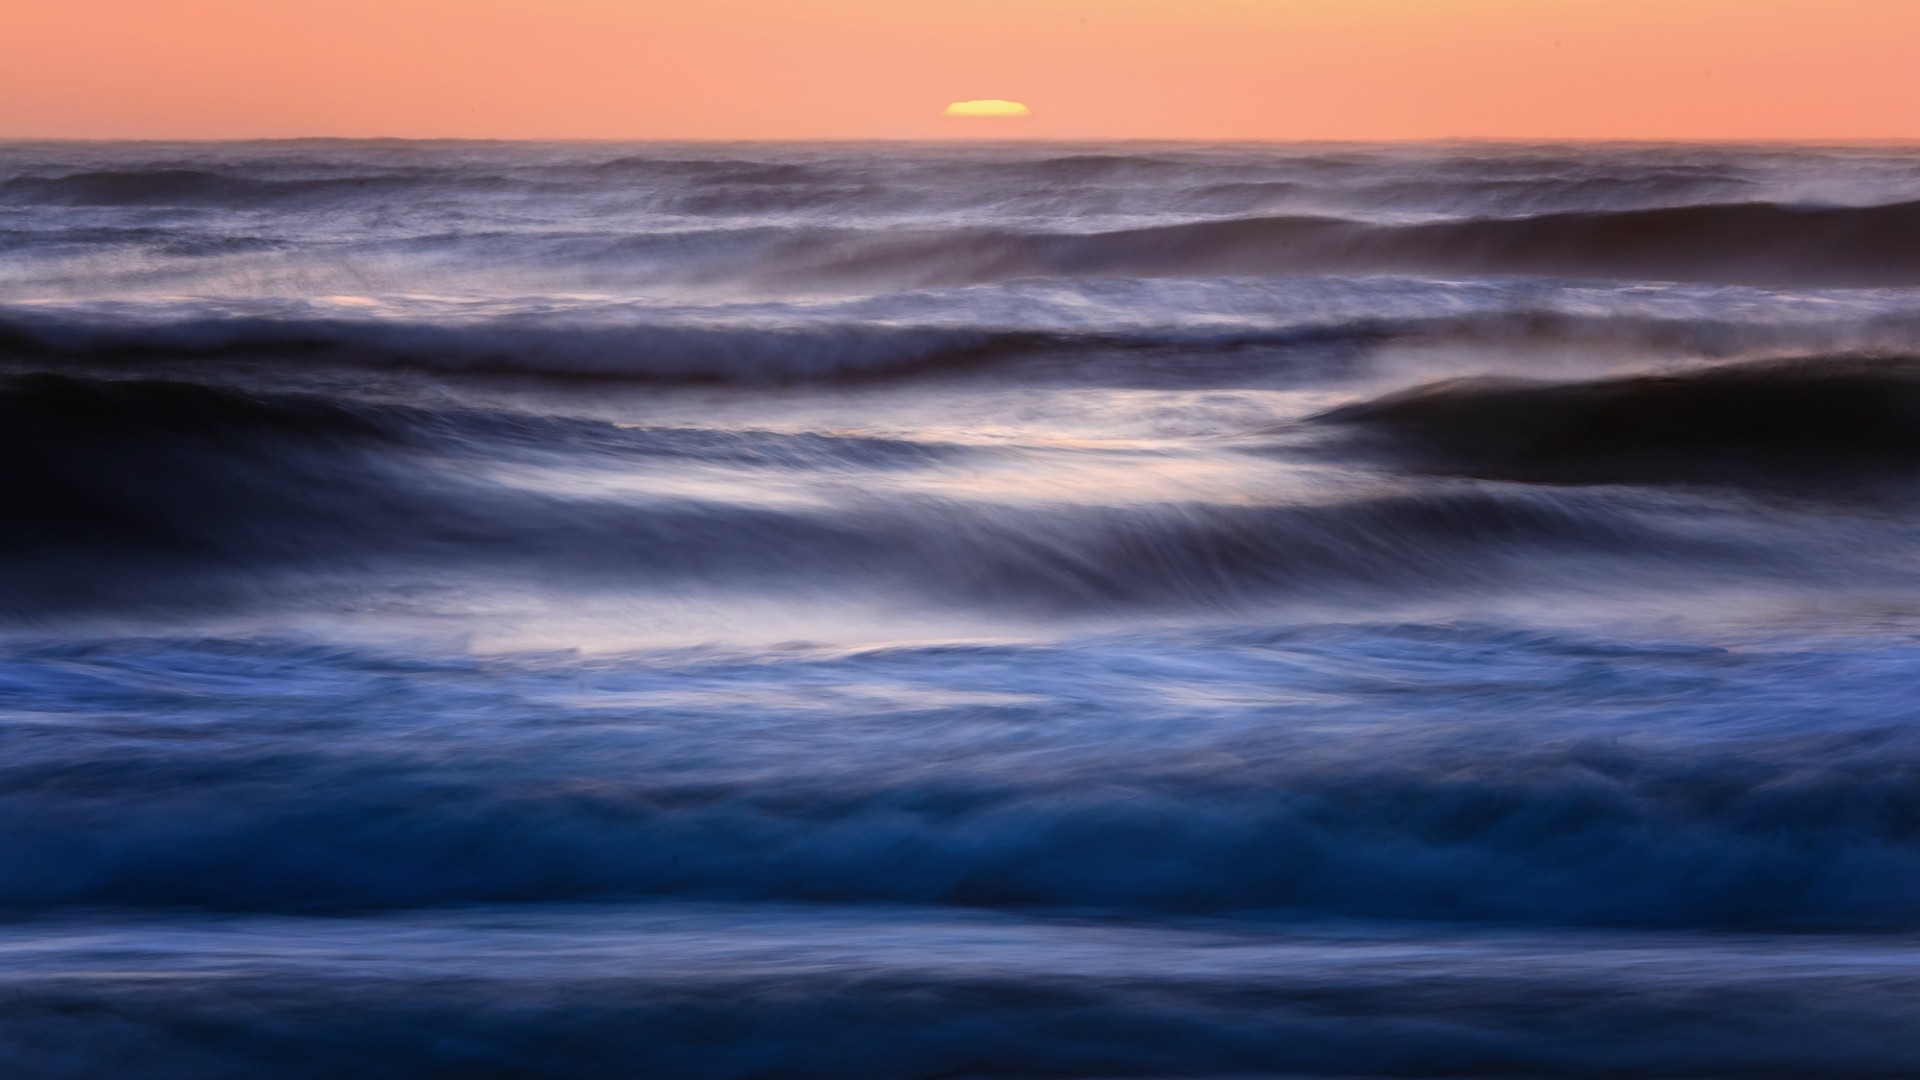 General 1920x1080 nature water sea waves sunset horizon long exposure